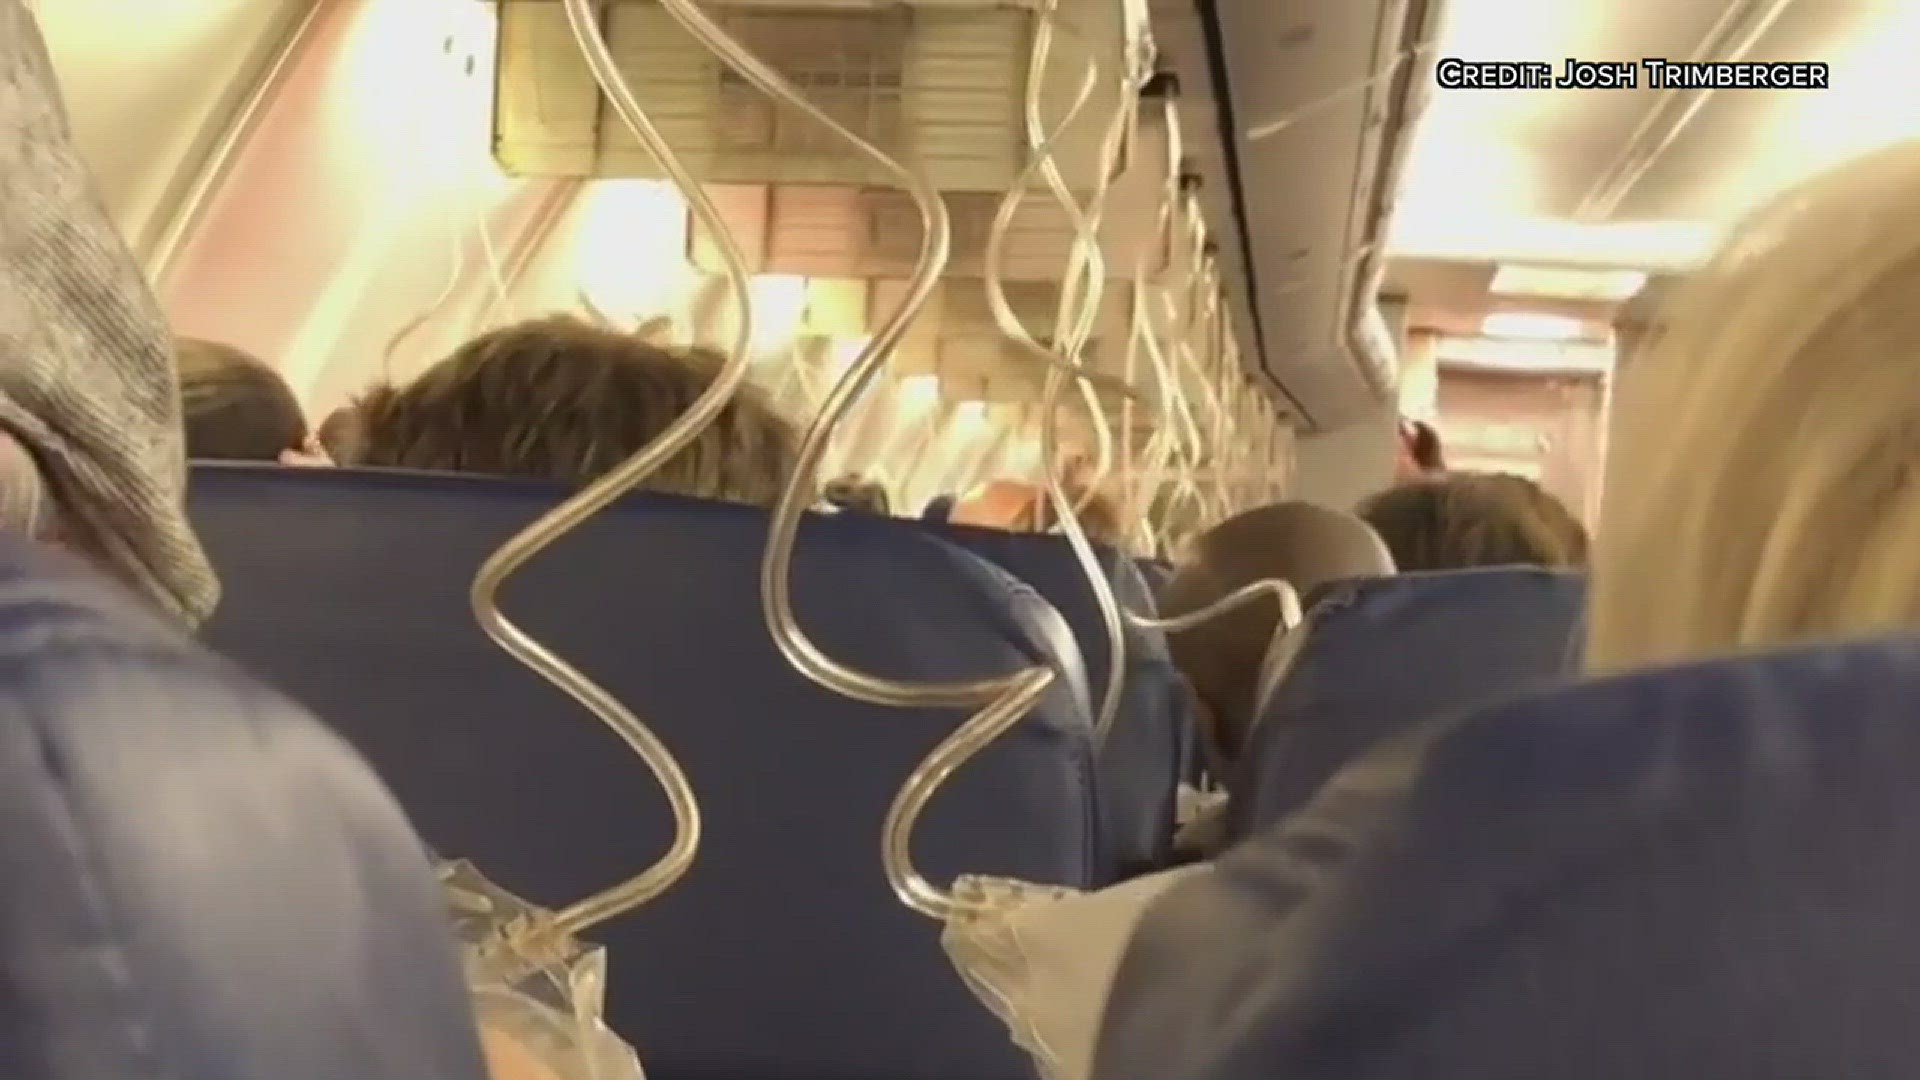 4 passengers suffered minor injuries on Dallas-bound flight from Denver.